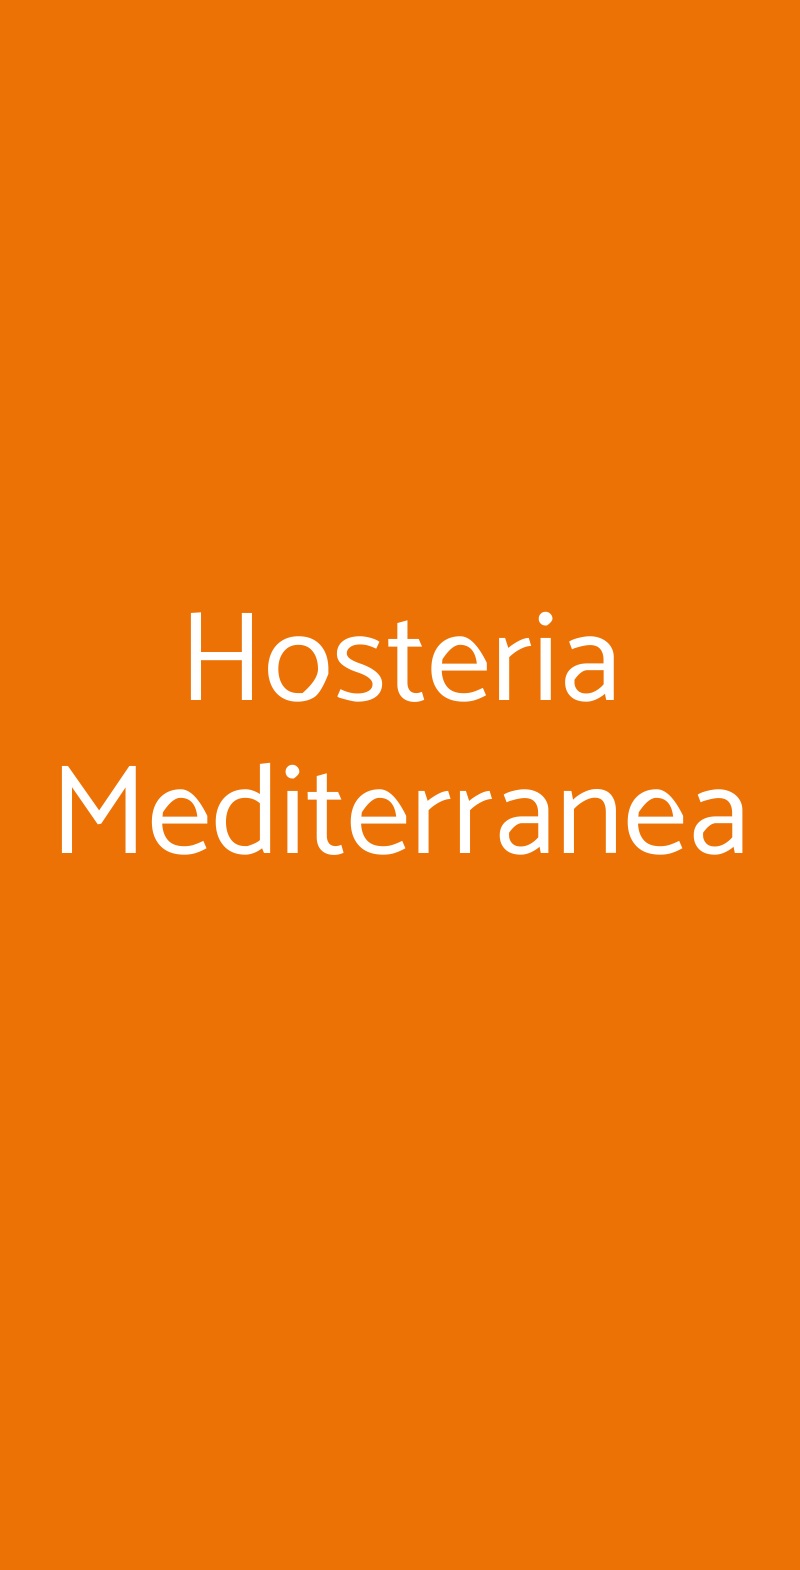 Hosteria Mediterranea Imola menù 1 pagina